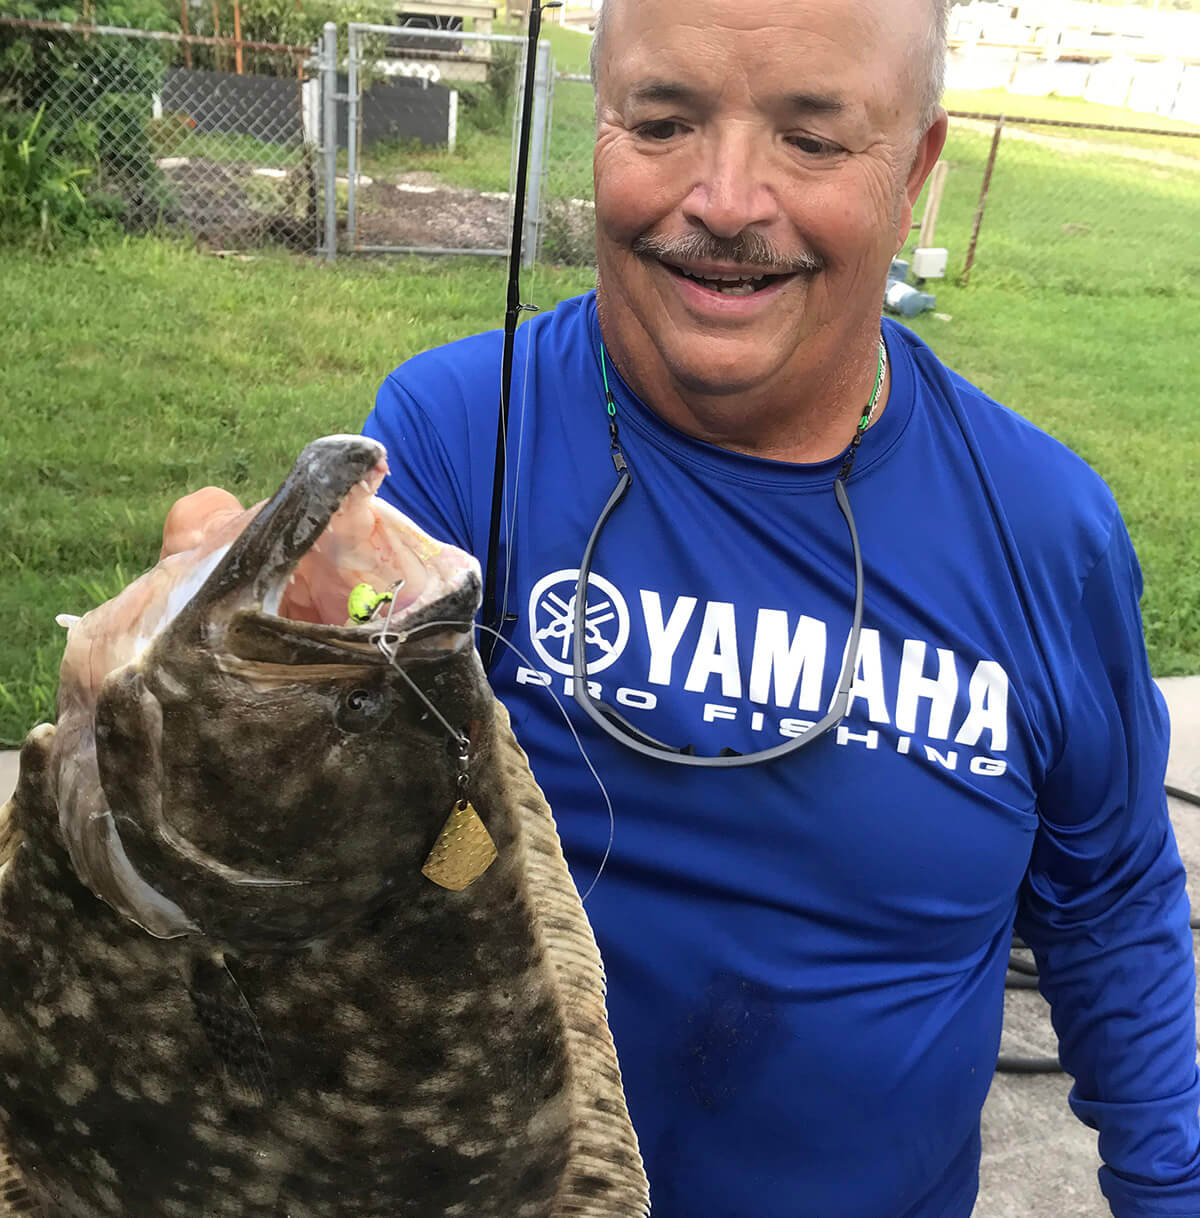 Flounder Fishing in North Carolina - Taking Advantage of a Short